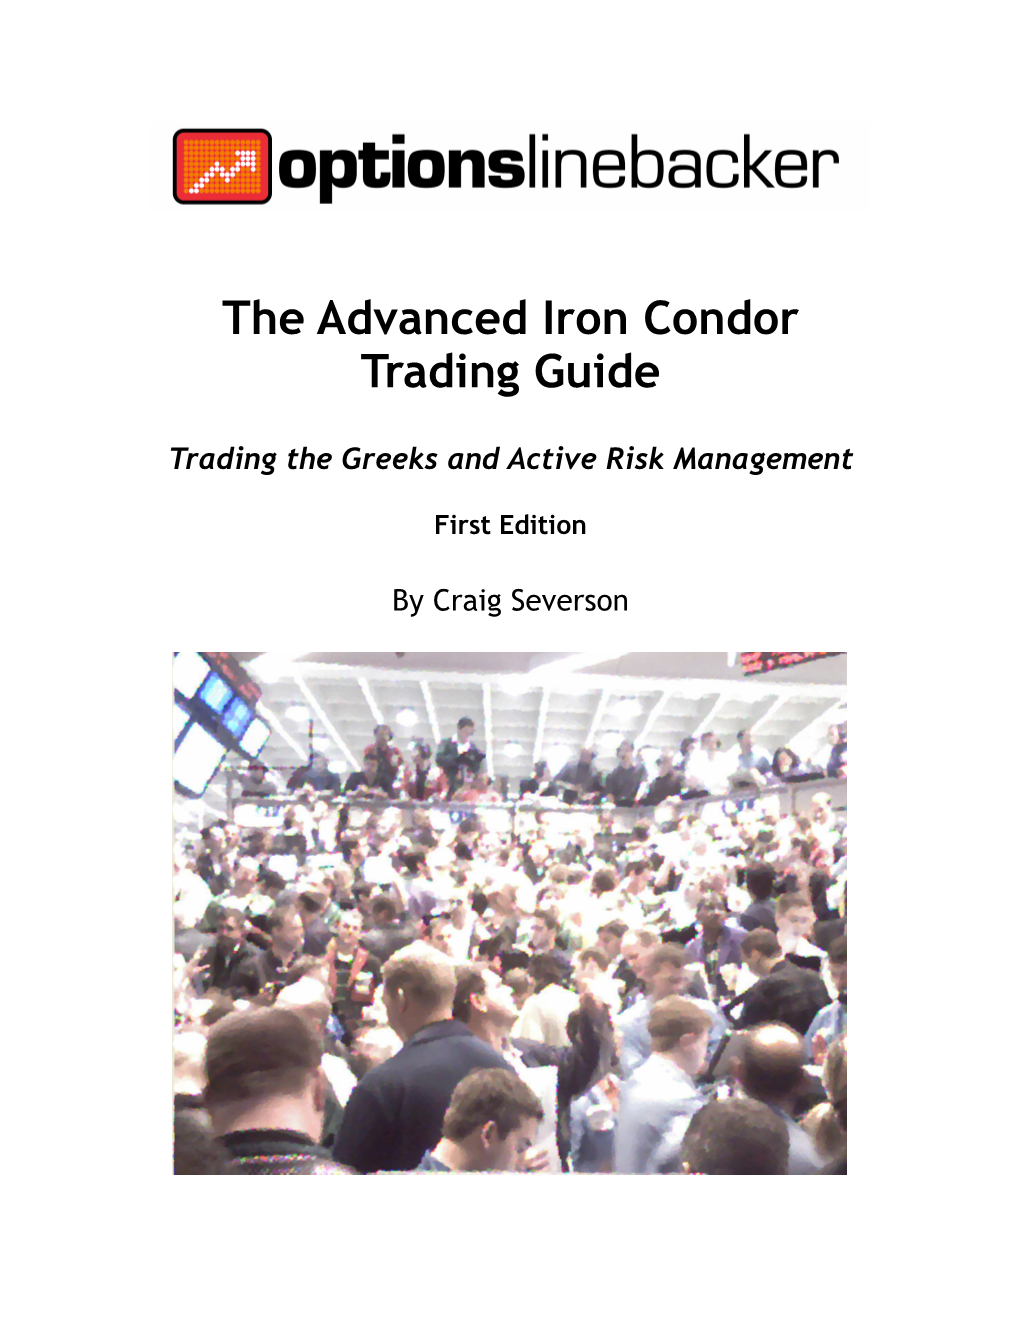 The Advanced Iron Condor Trading Guide